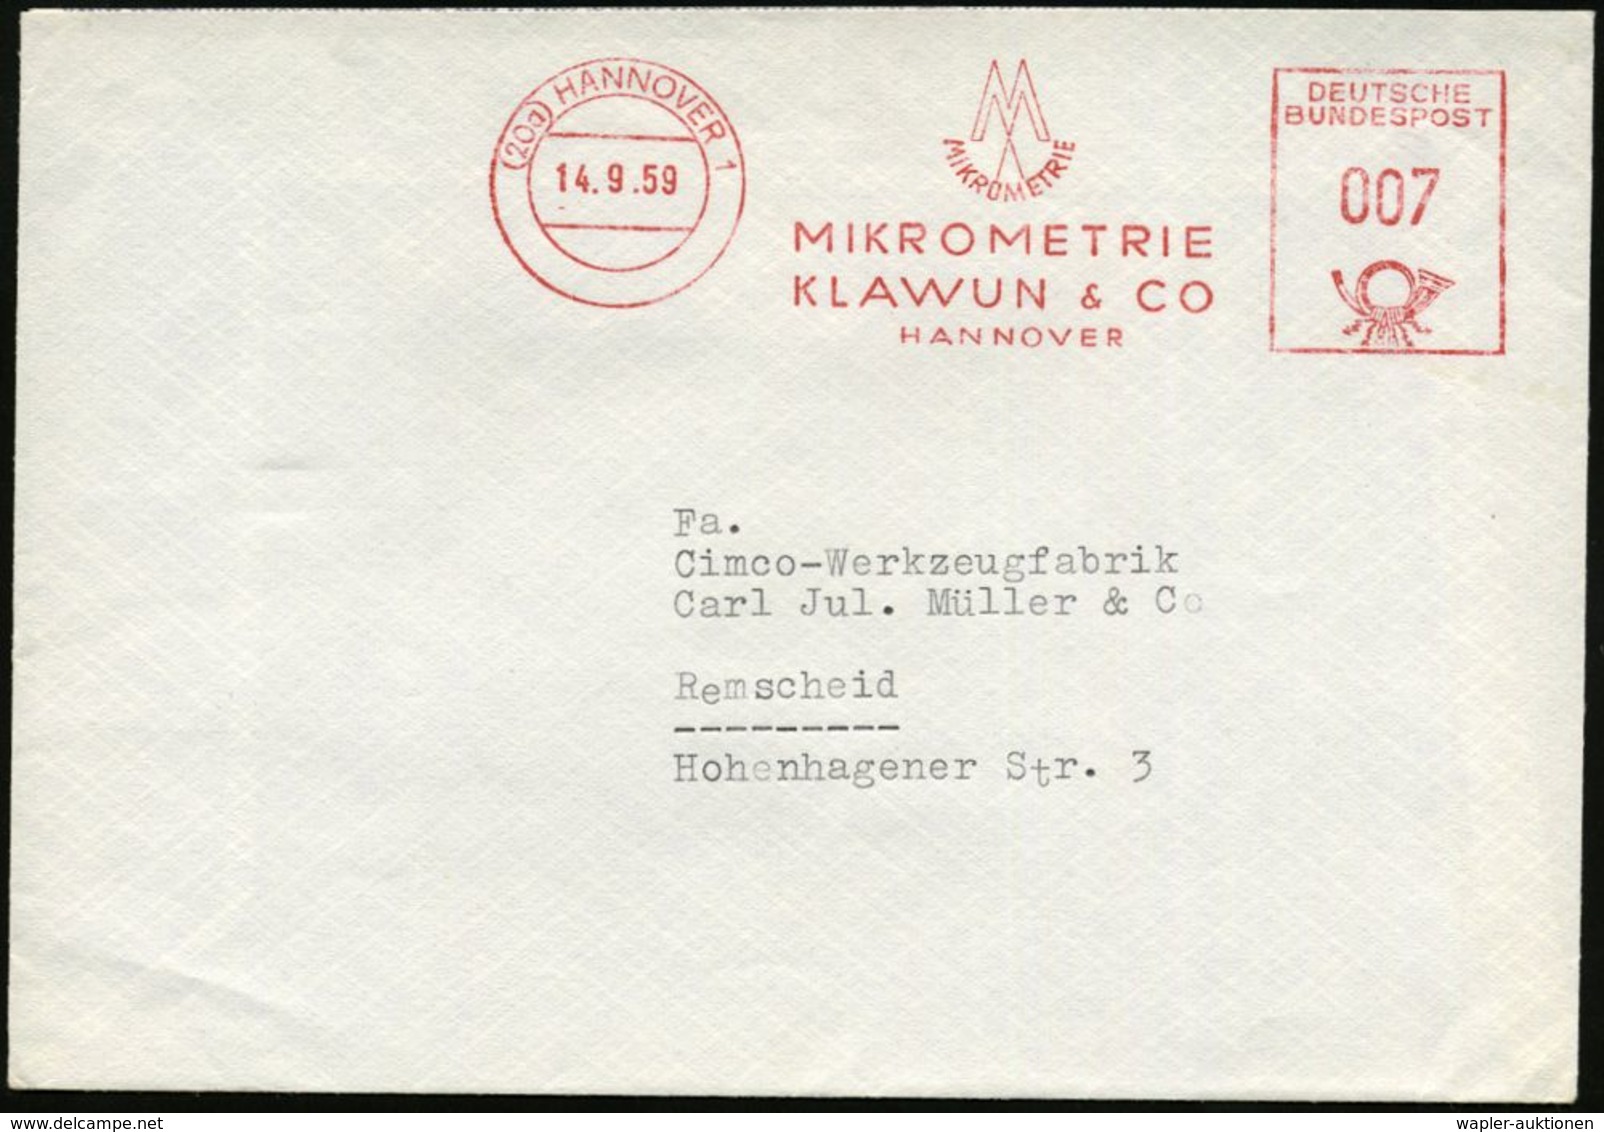 MATHEMATIK / RECHNEN / ZAHLEN / GEOMETRIE : (20a) HANNOVER 1/ MIKROMETRIE/ KLAWUN & CO 1959 (14.9.) AFS (Monogramm-Logo) - Non Classificati